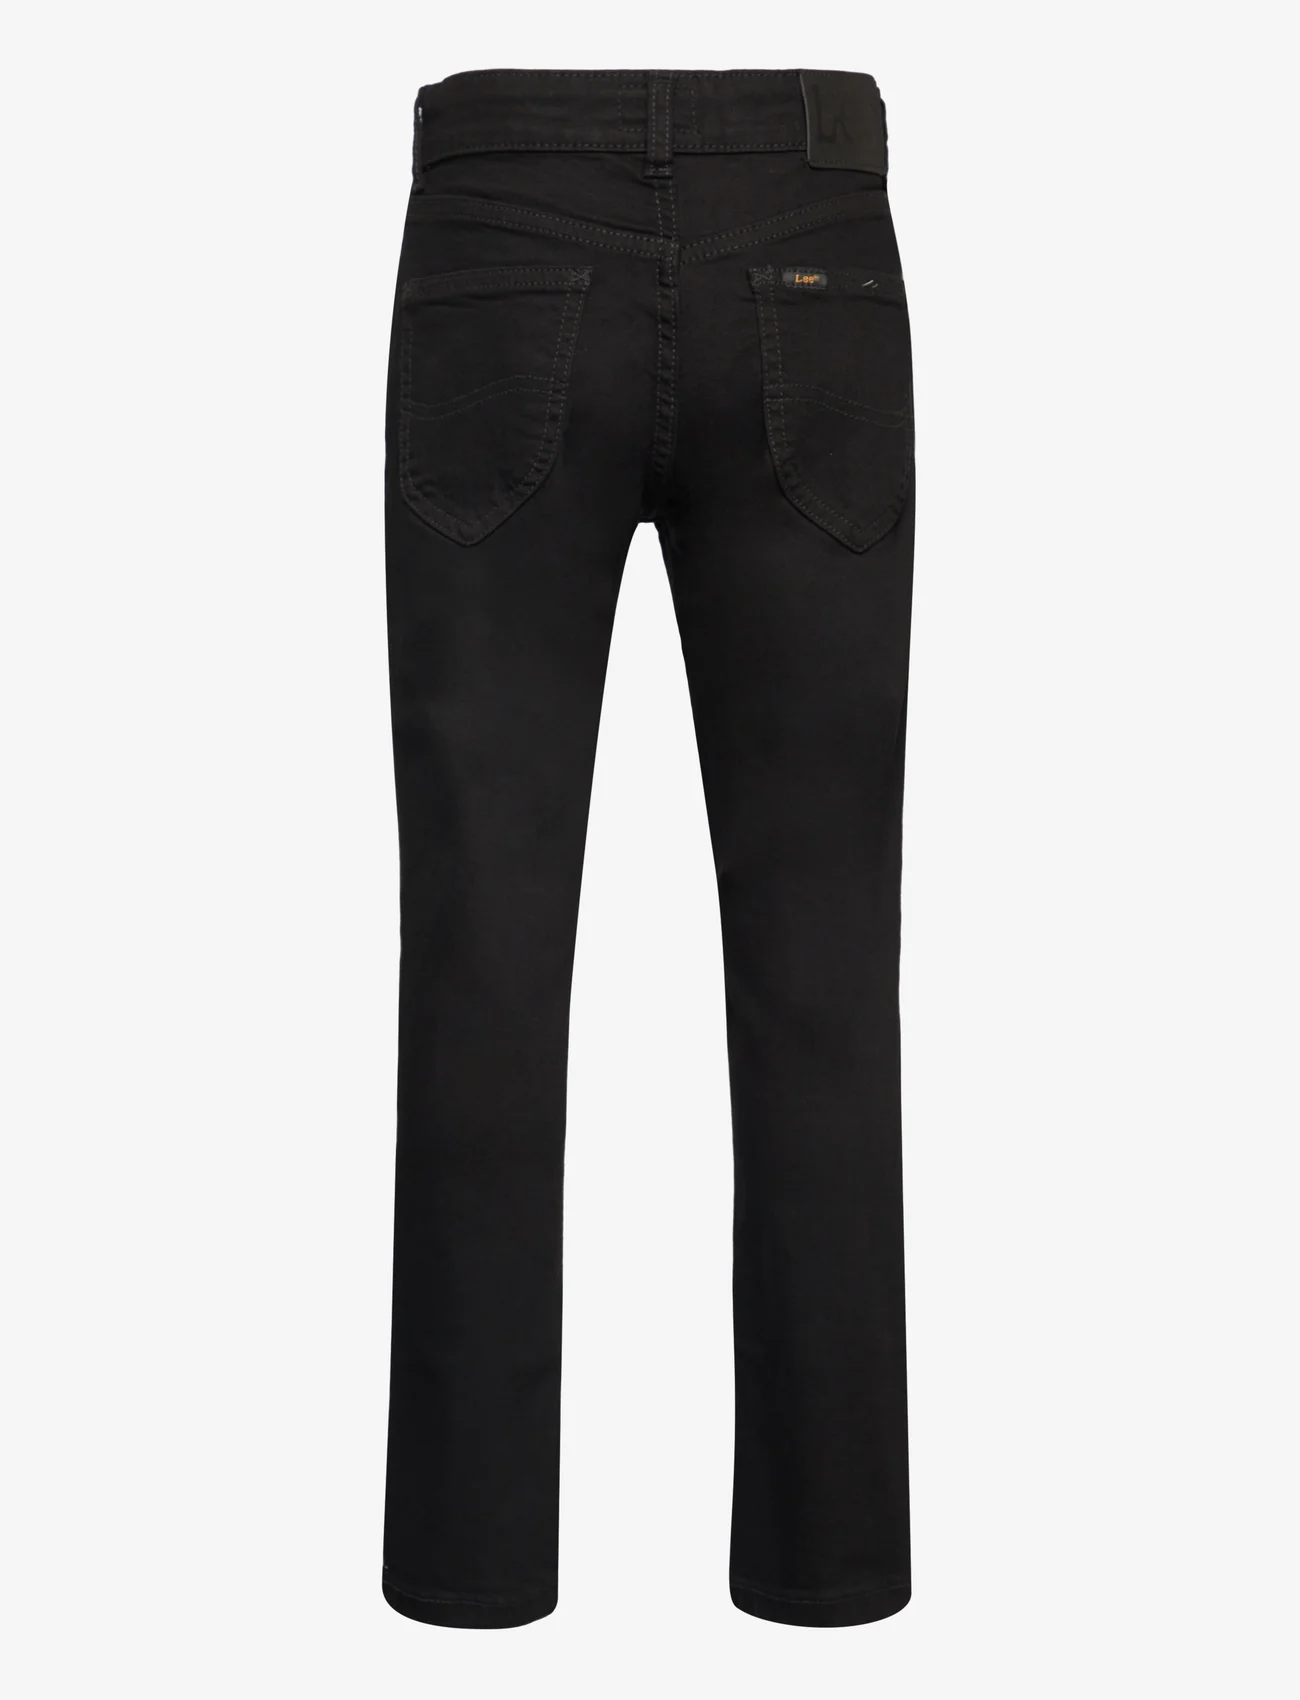 Lee Jeans - Daren - regular jeans - black wash - 1